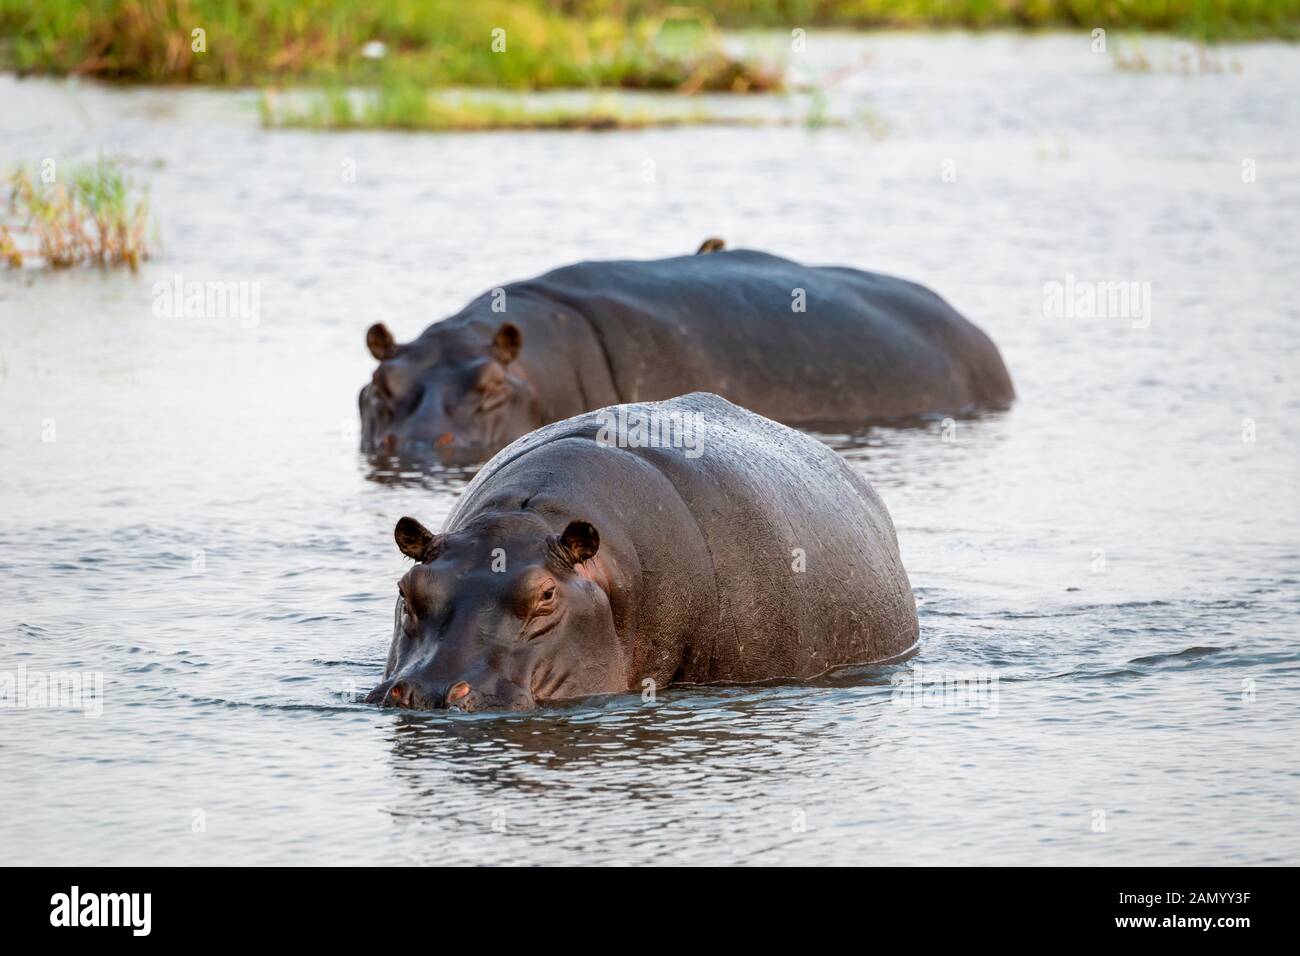 Pair of hippopotamuses (Hippopotamus amphibius) standing in shallow water in Moremi Game Reserve, Okavango Delta, Botswana, Southern Africa Stock Photo